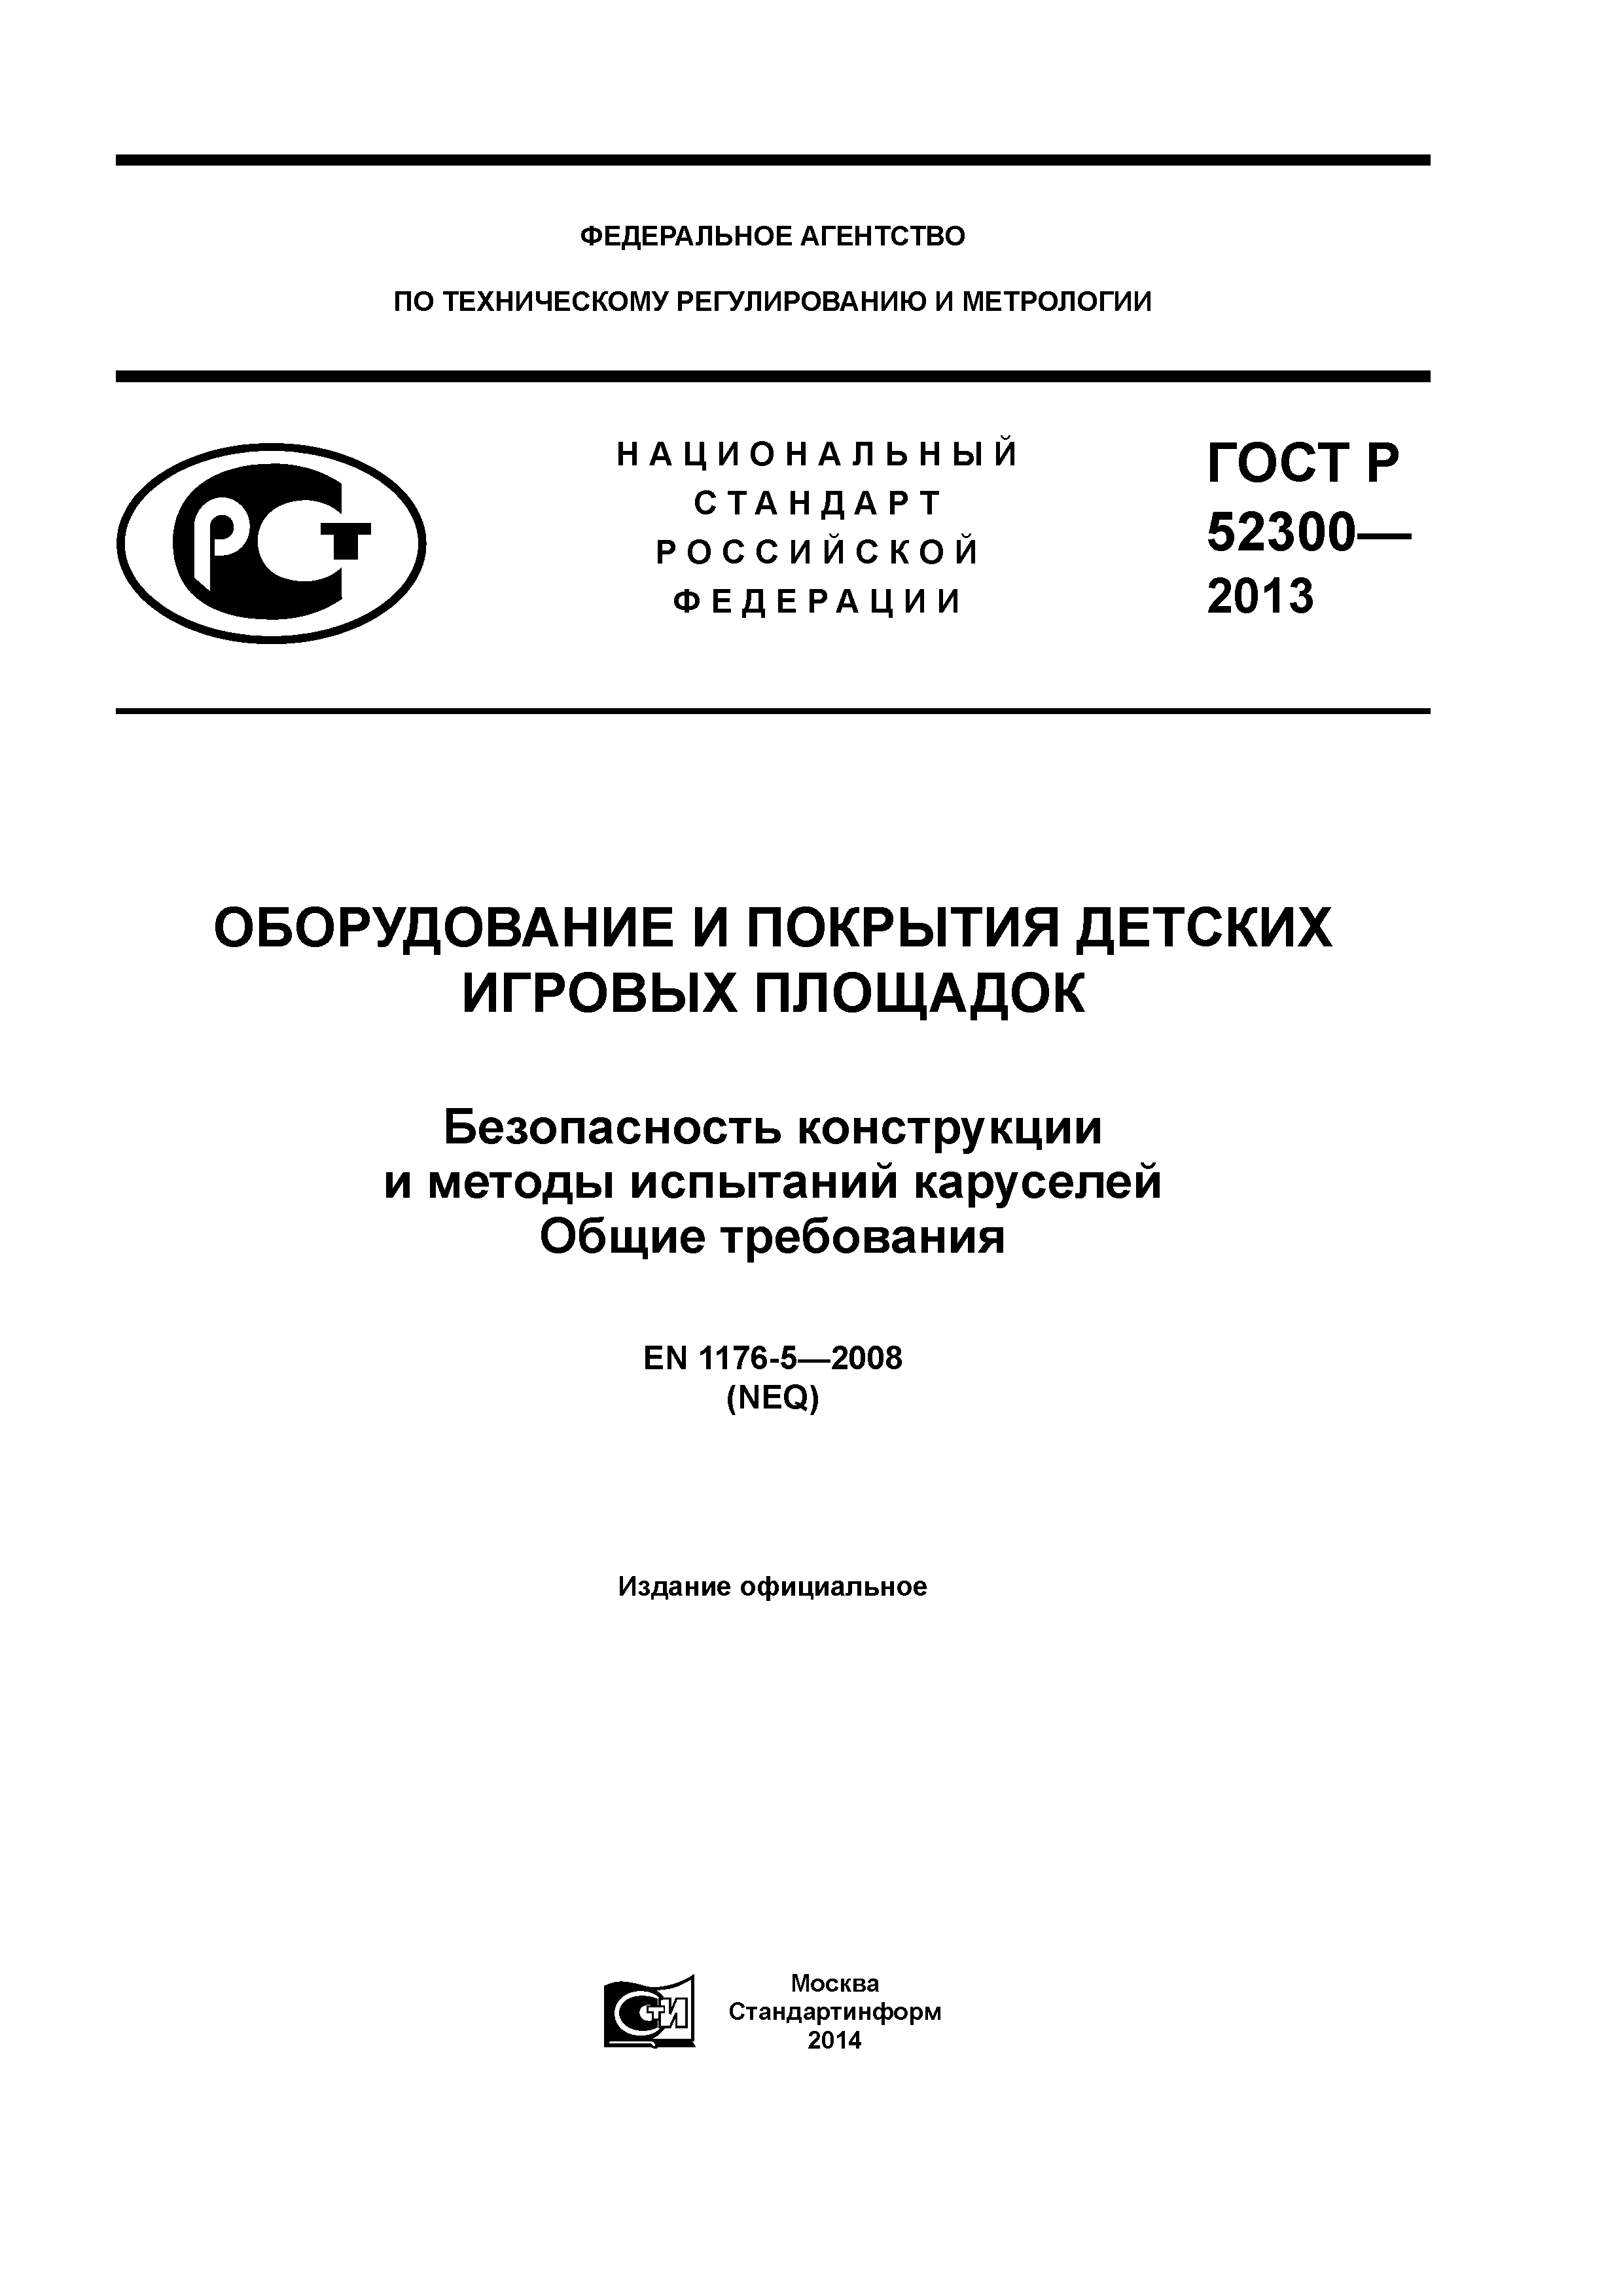 ГОСТ Р 52300-2013